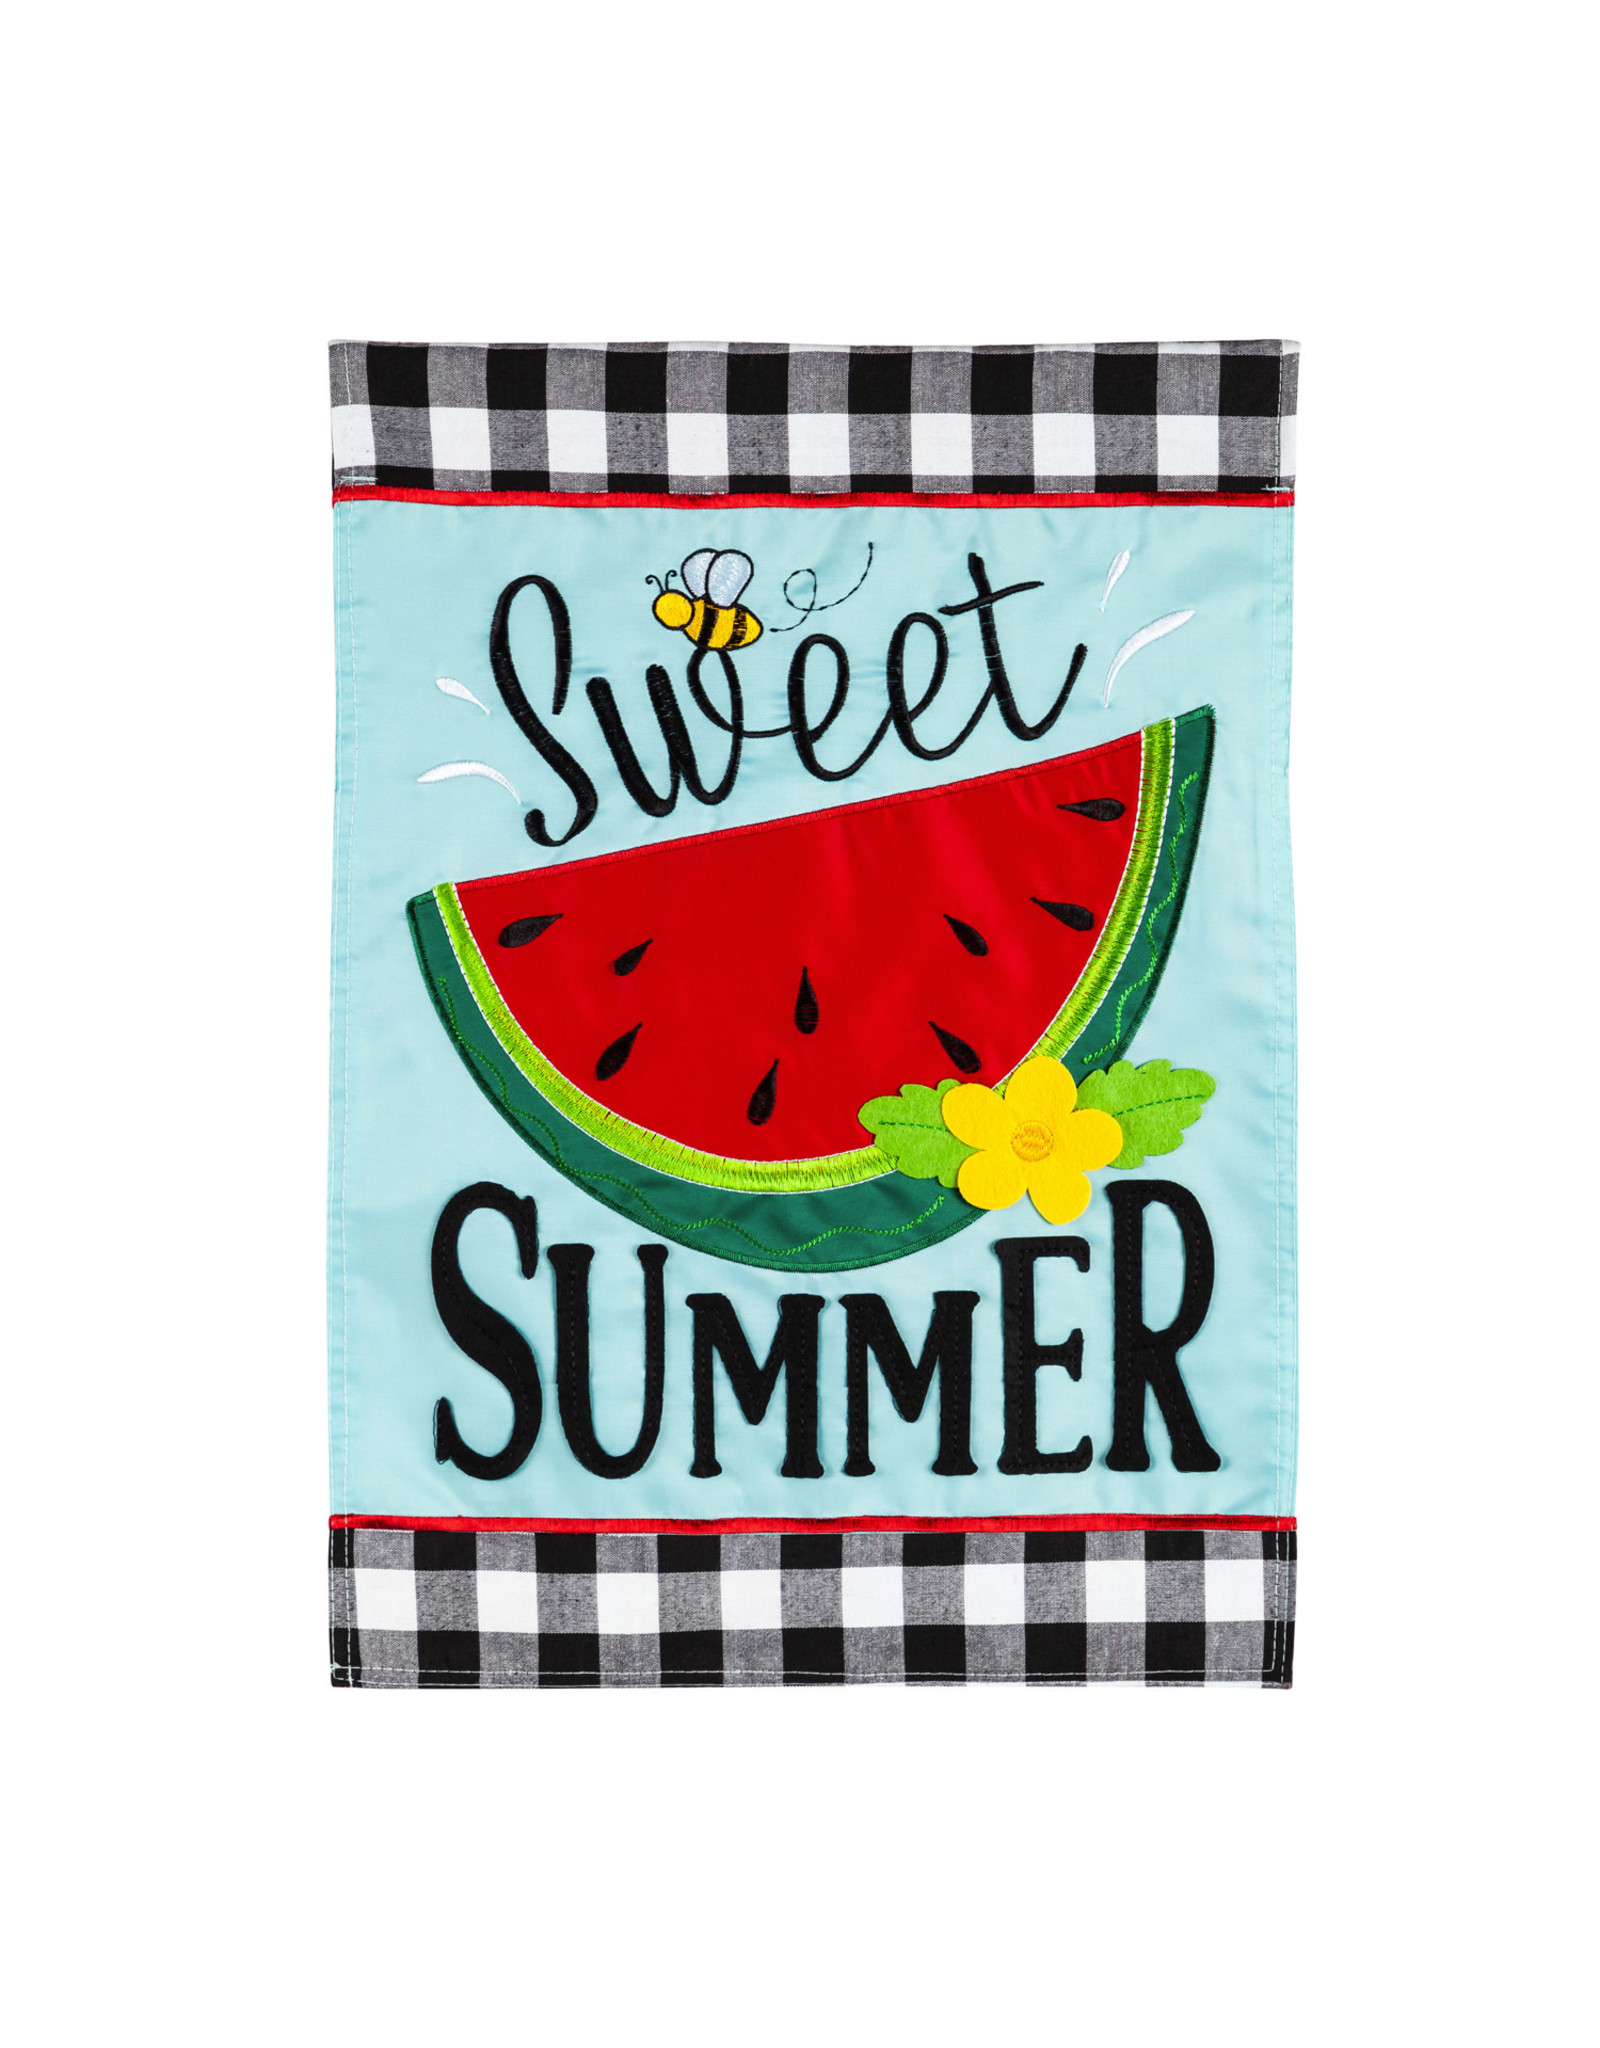 Evergreen Enterprises Sweet Summer Watermelon Garden Applique Flag